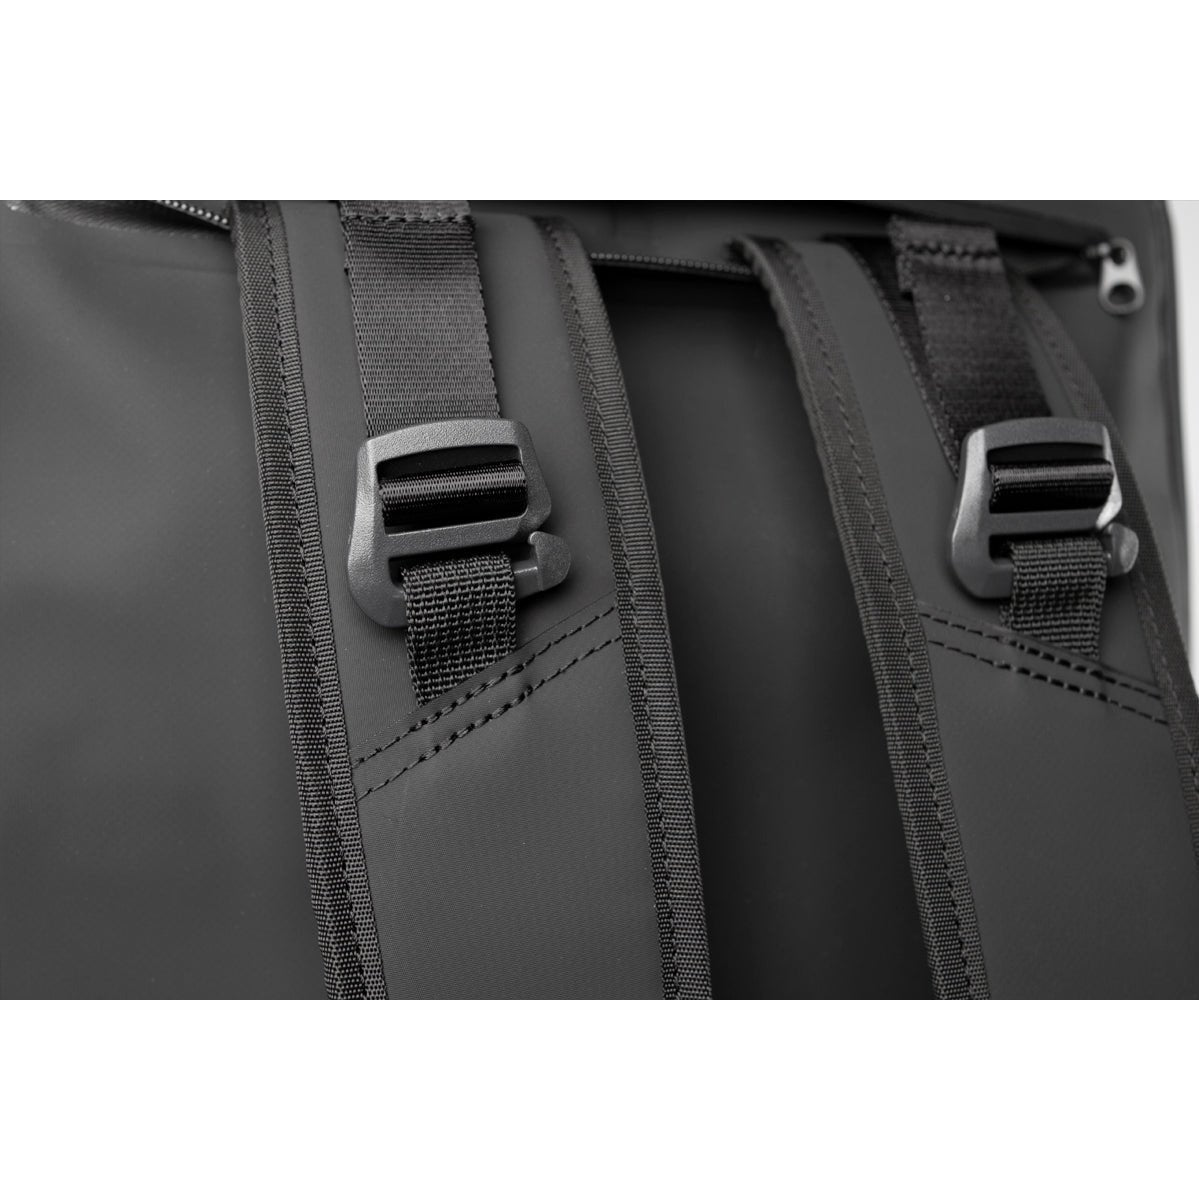 Zhik 45L Waterproof Duffle/backpack